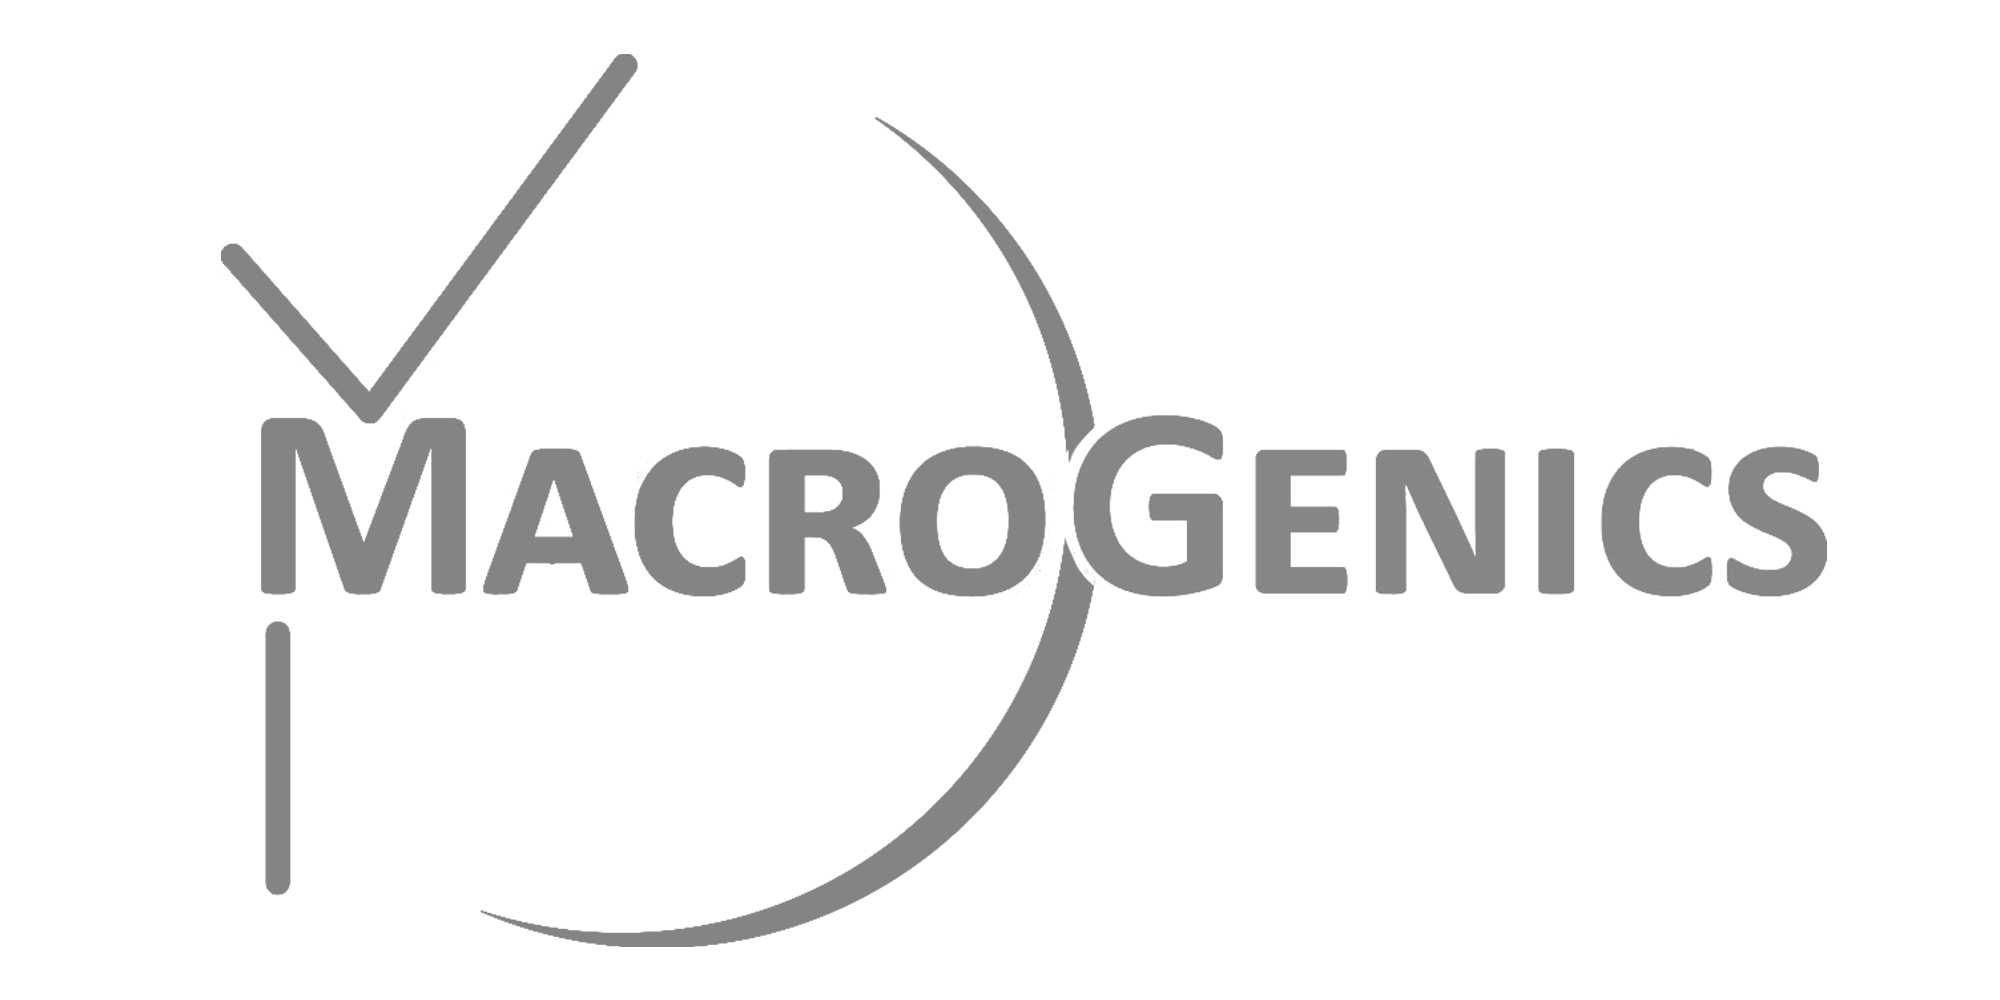 Macrogenics logo